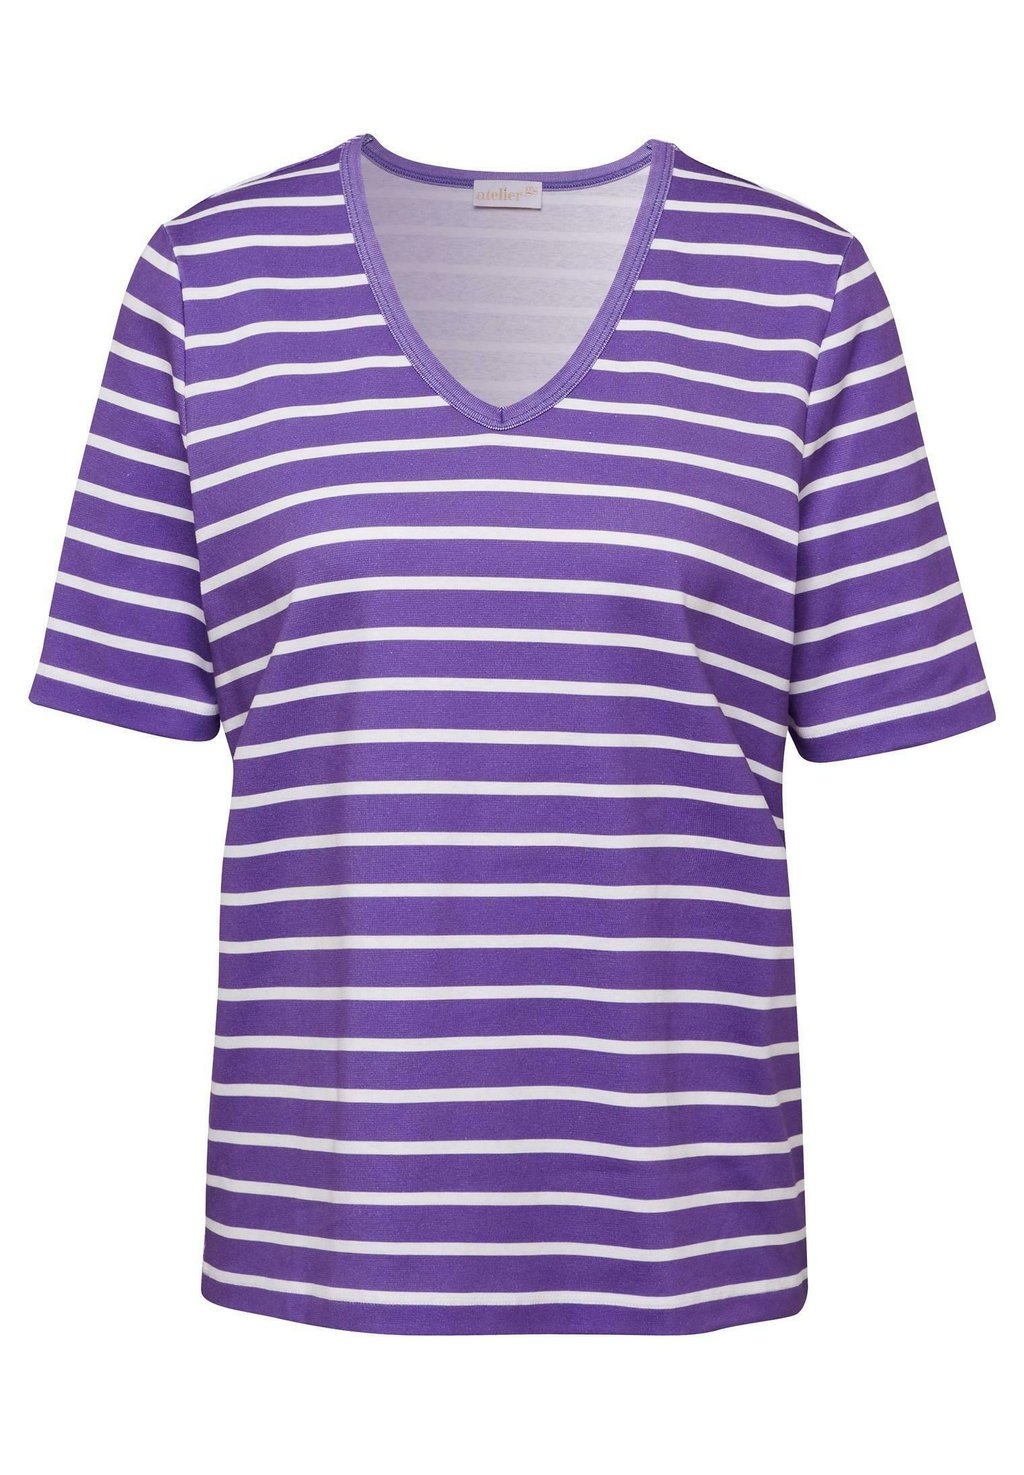 Футболка с принтом GOLDNER, цвет purple / white / striped футболка с принтом striped ac